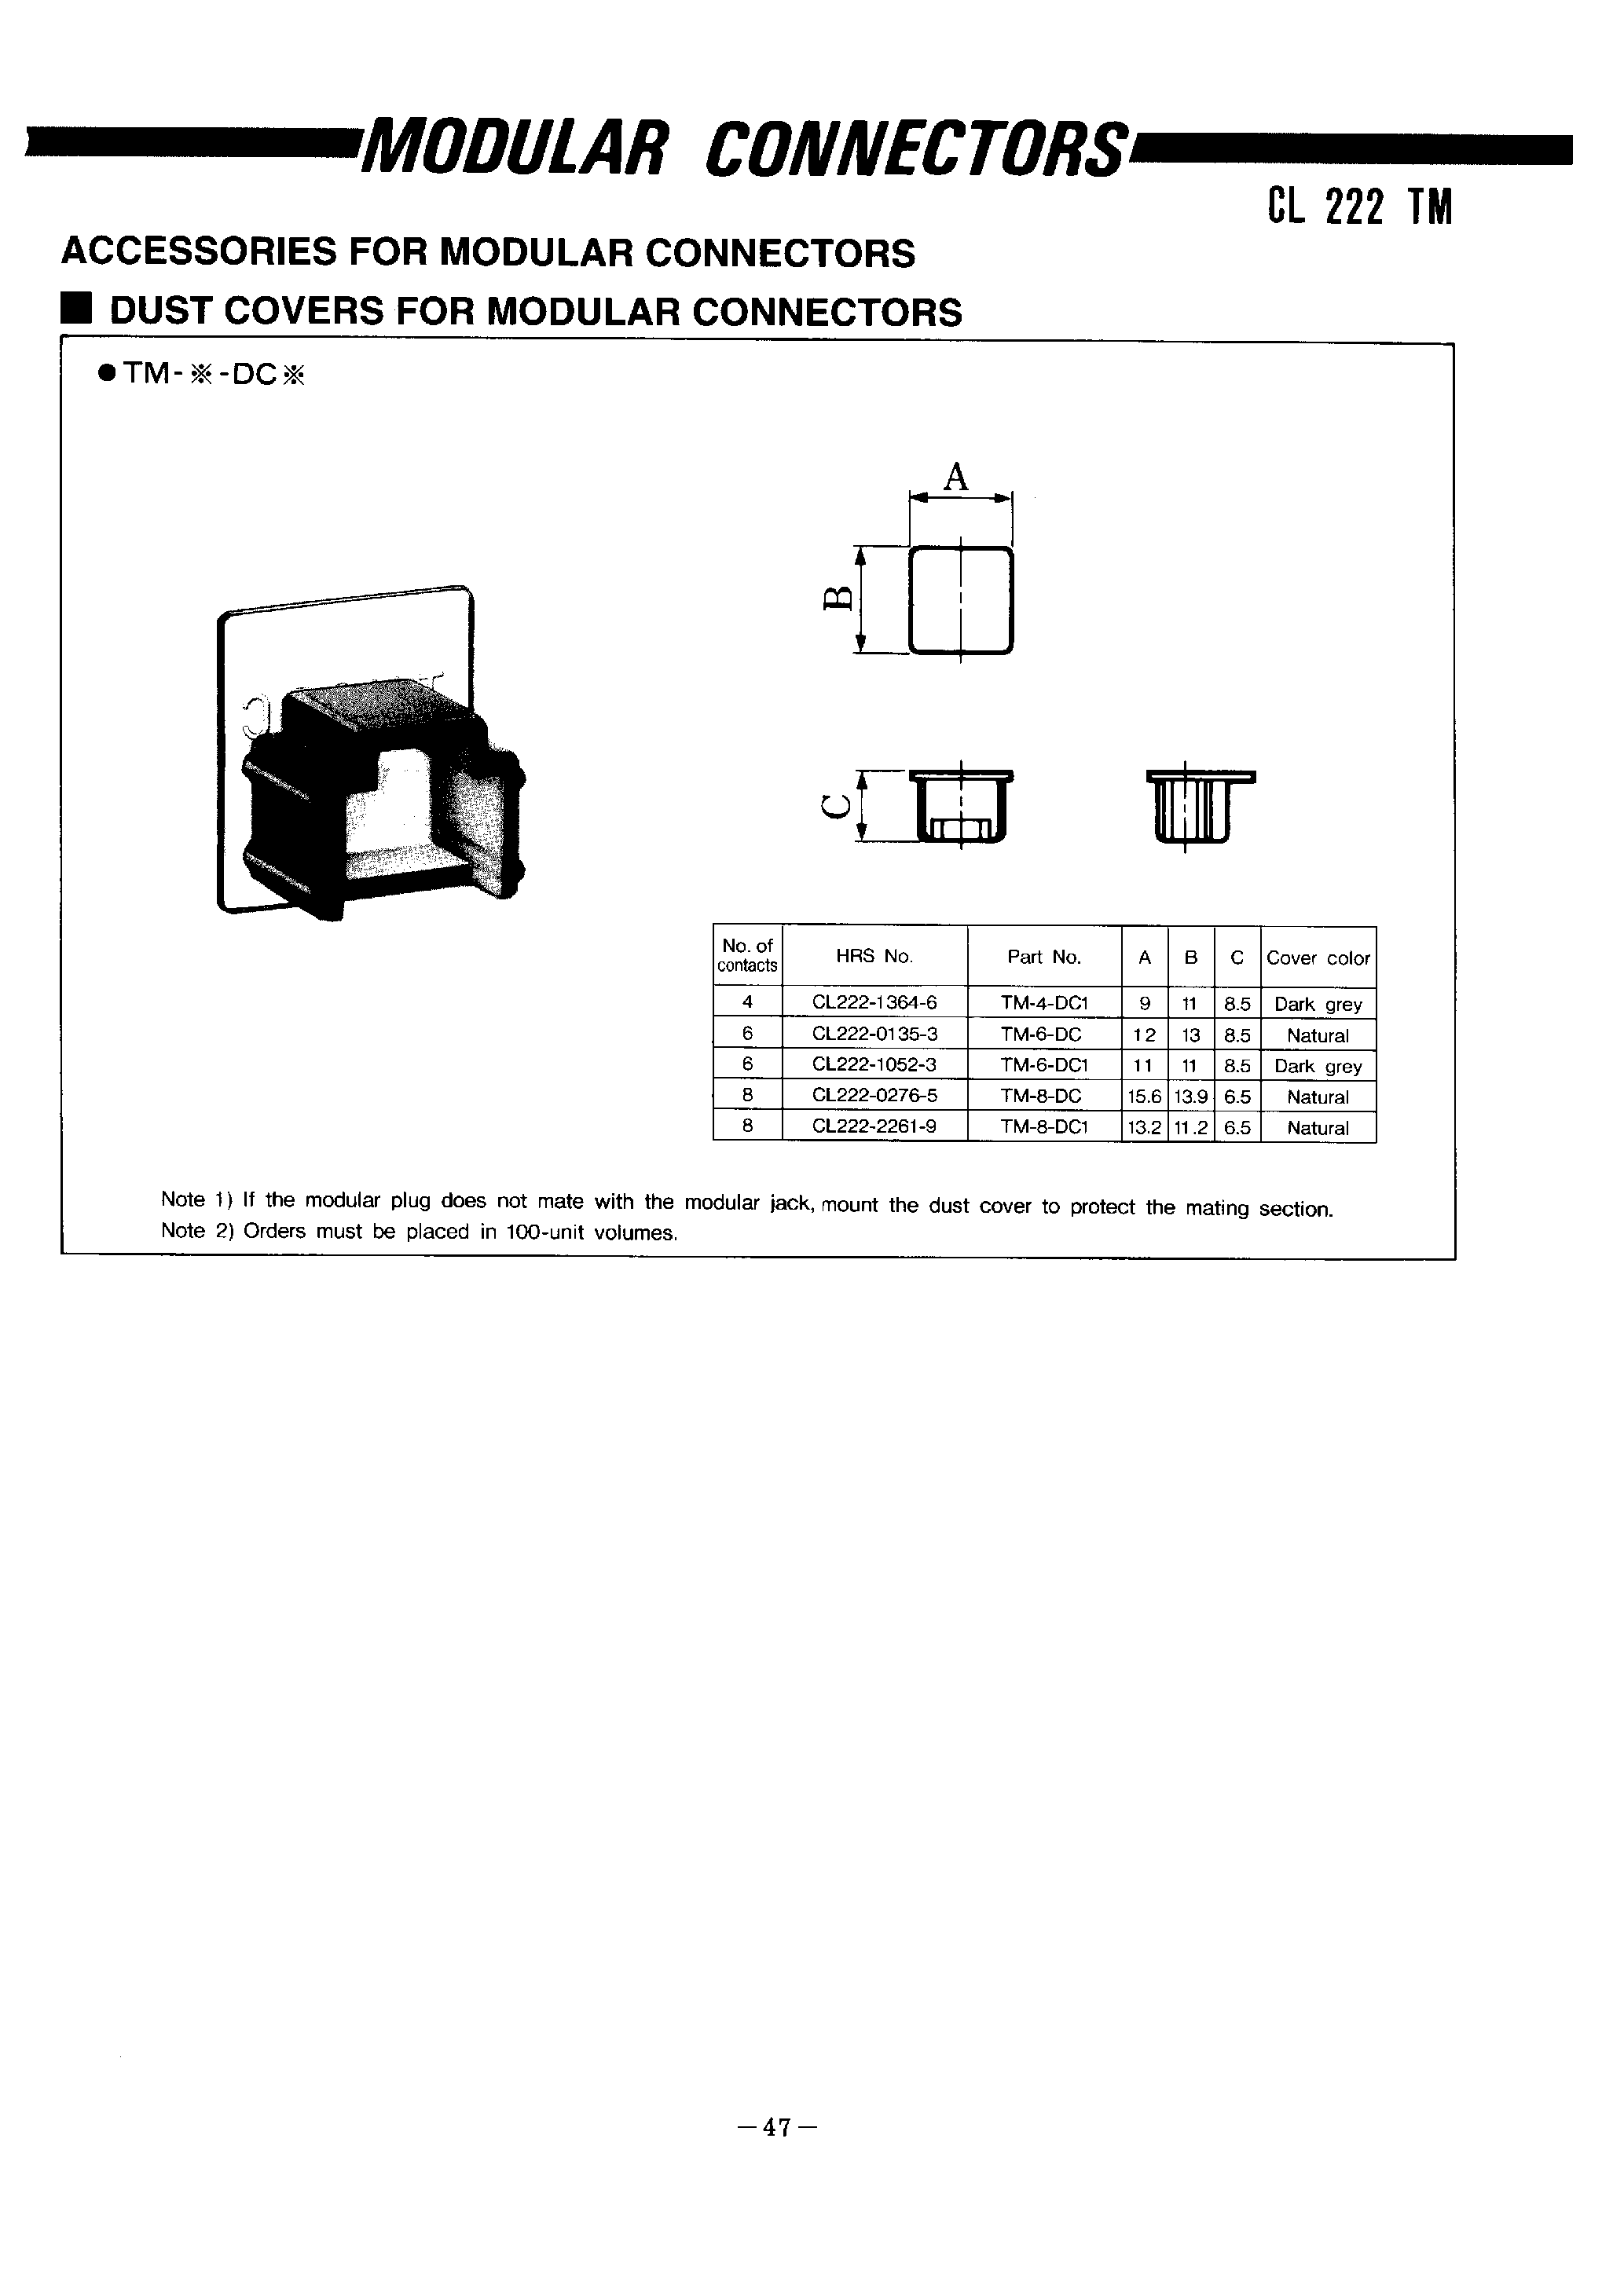 Datasheet TM-4-DC1 - MODULAR CONNECTORS(ACCESSORIES) page 1